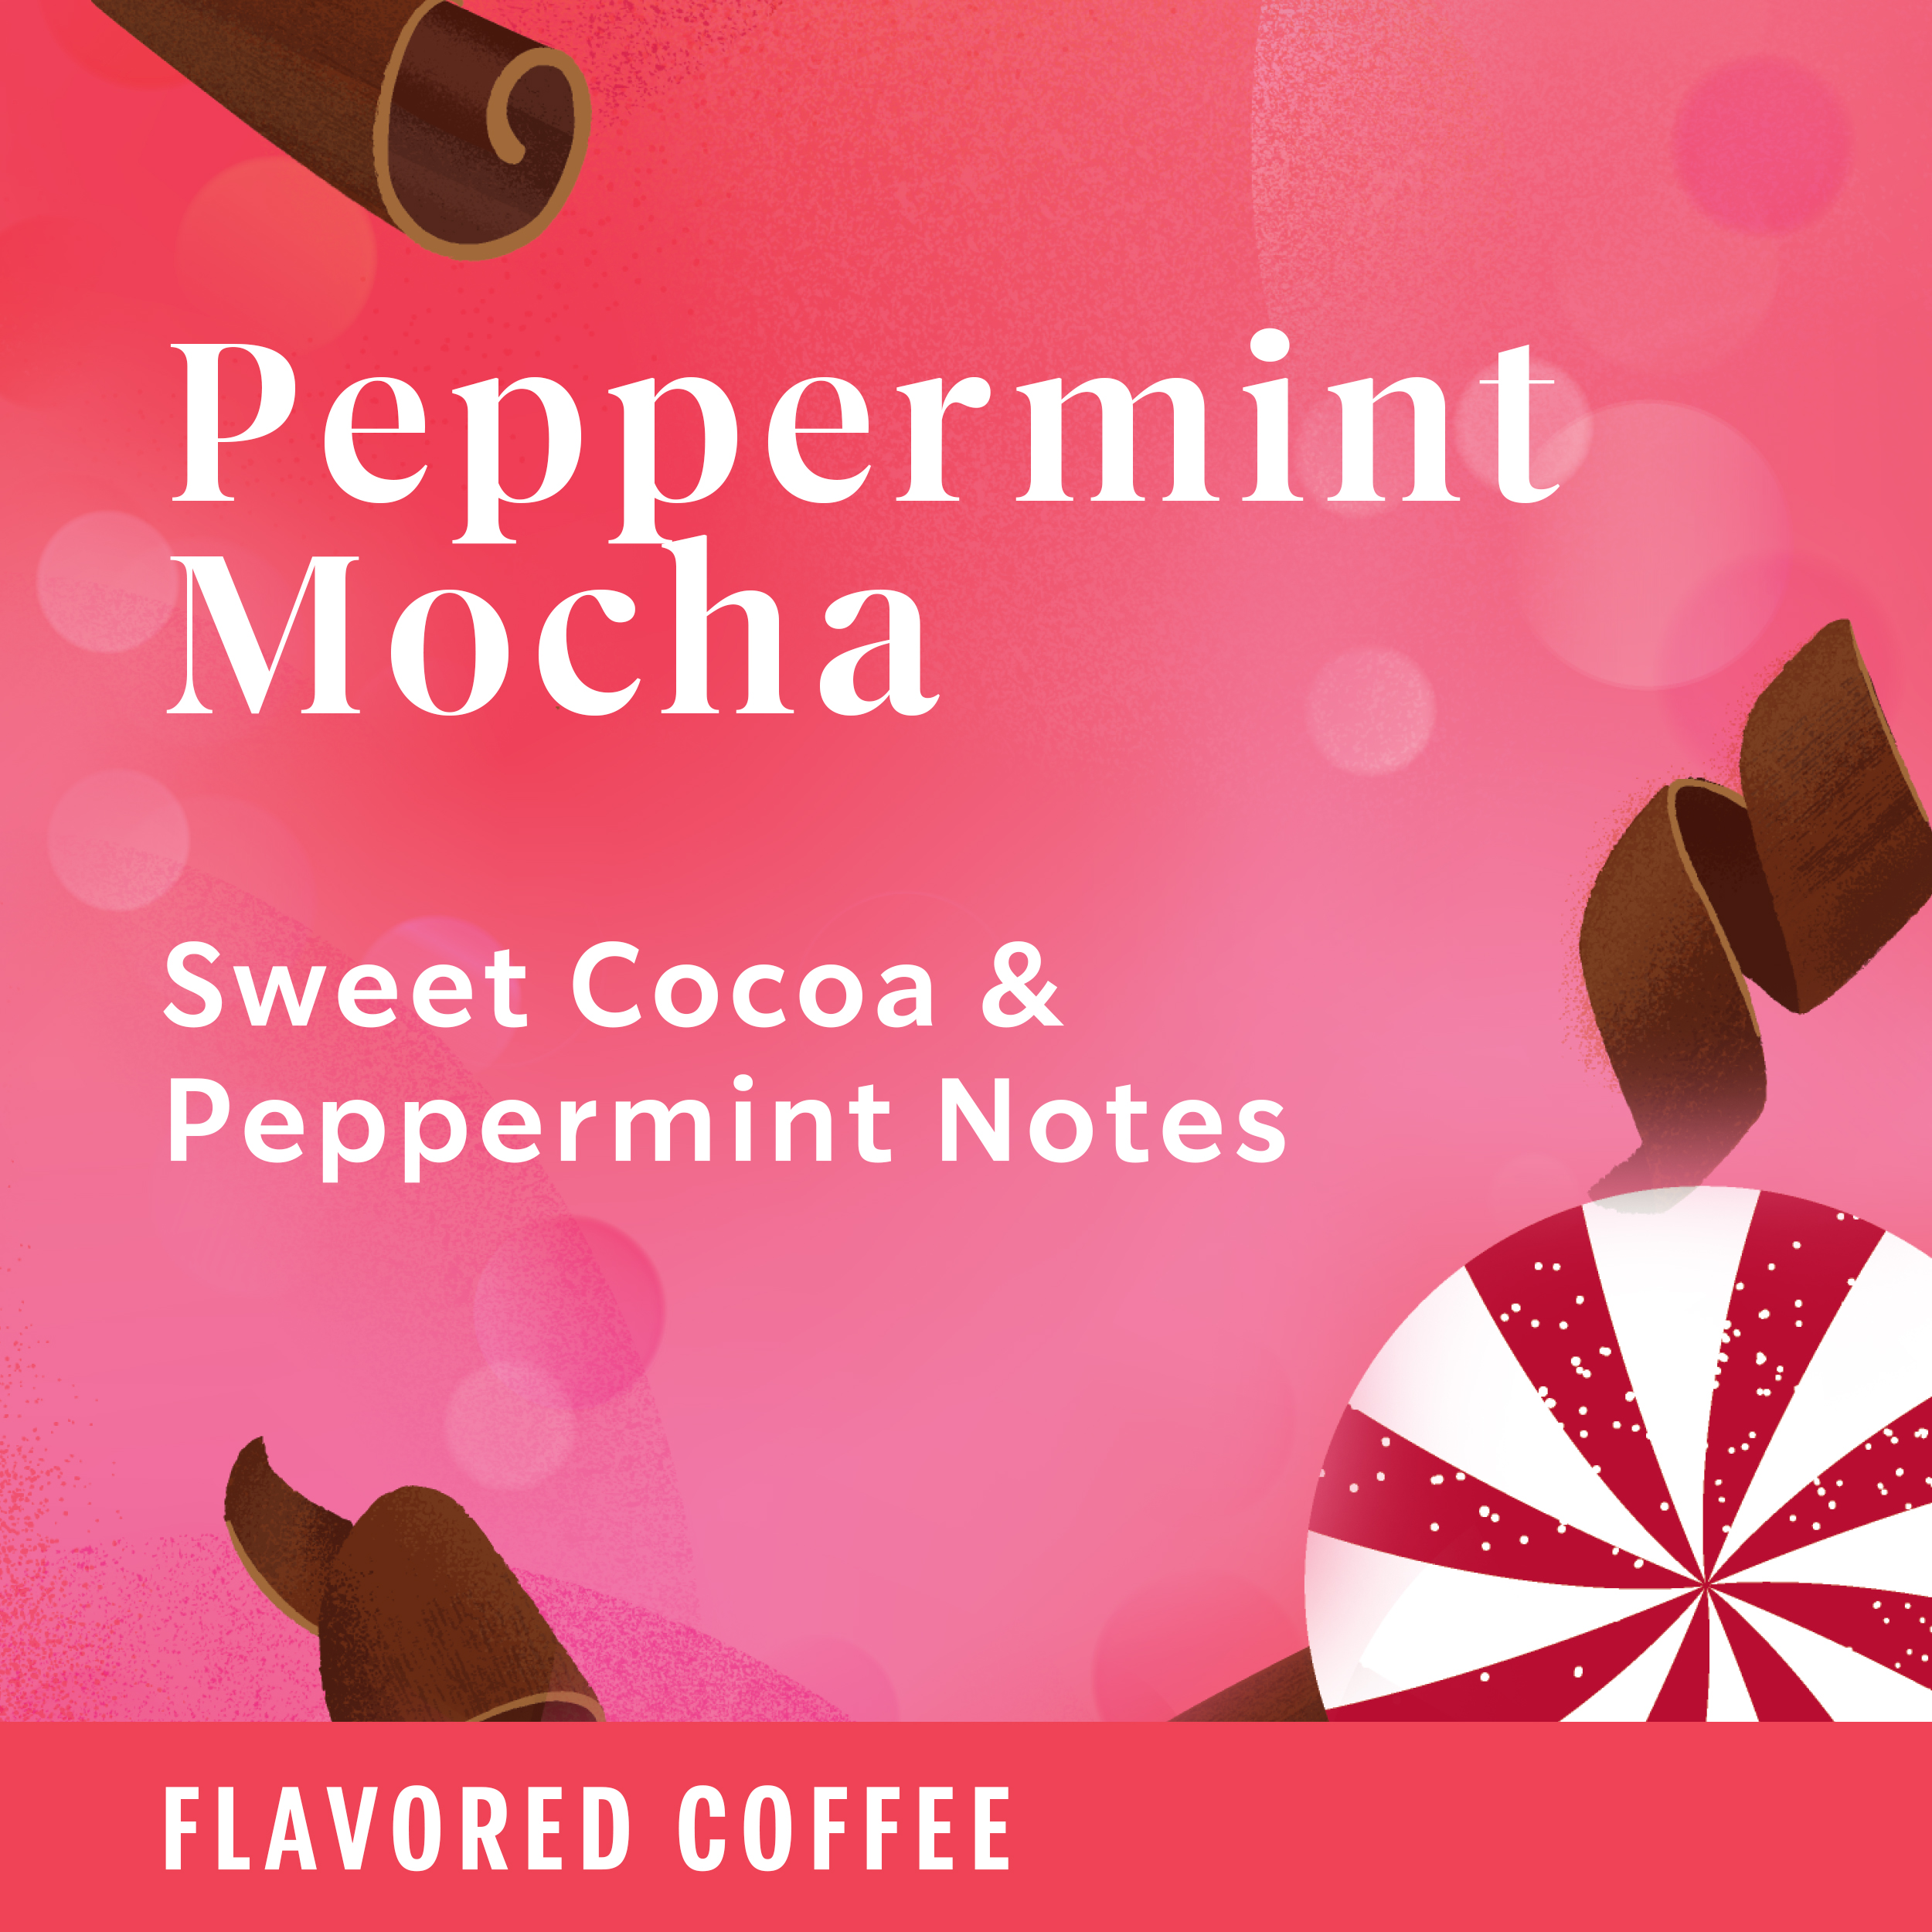 Starbucks Ground Coffee, Peppermint Mocha Flavored Coffee, 1 Bag (17 Oz) - image 4 of 9